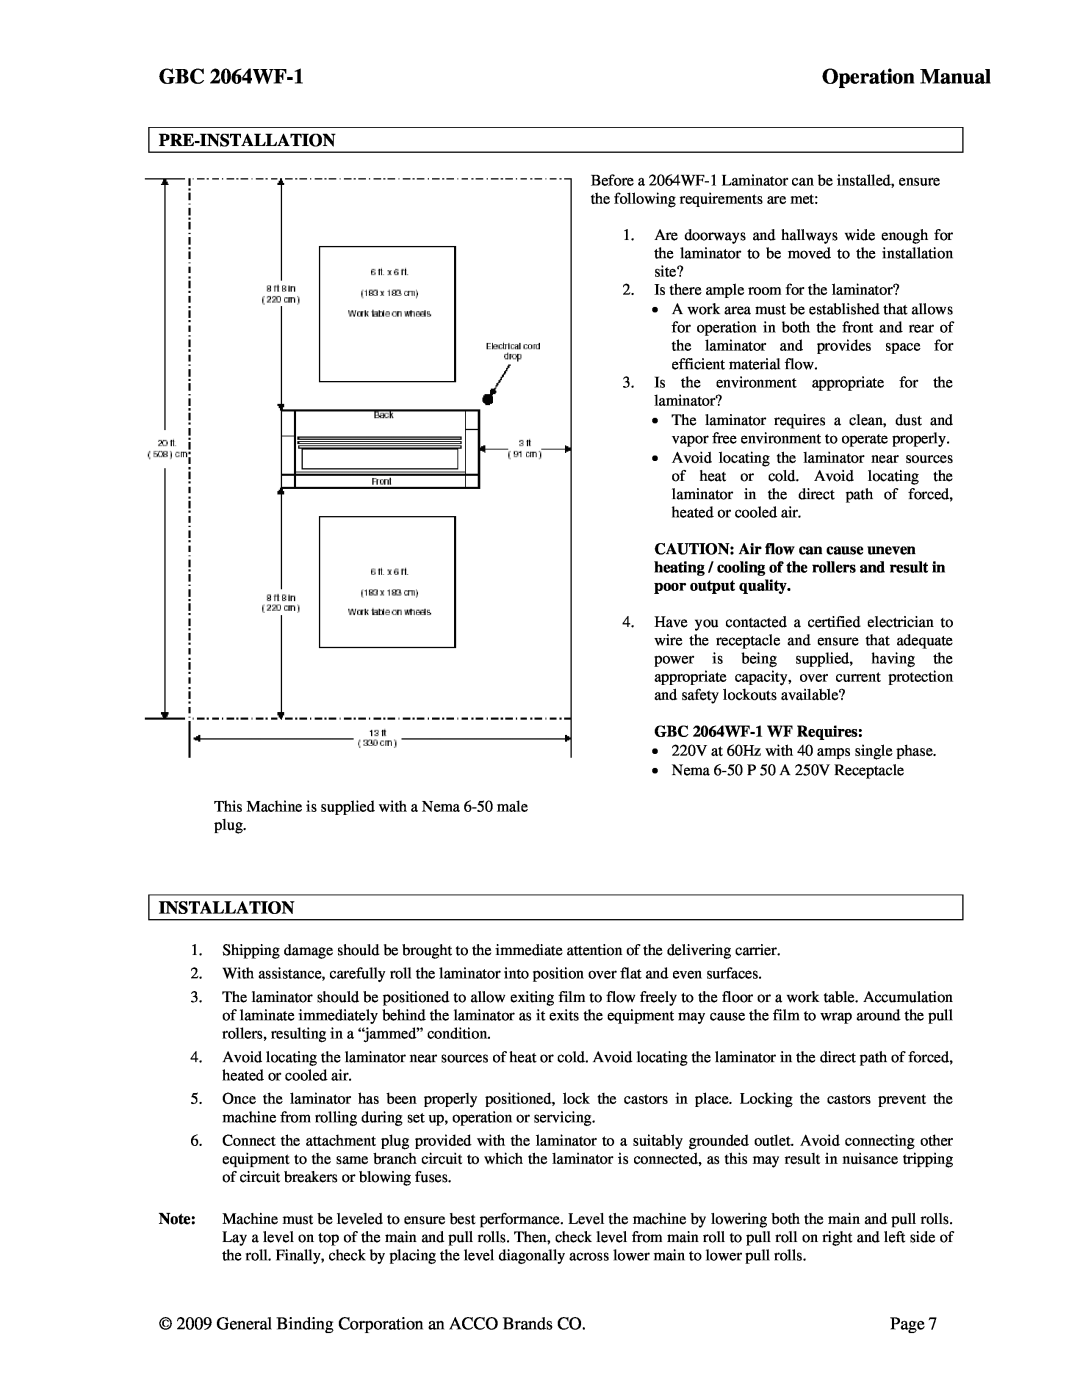 ACCO Brands operation manual Pre-Installation, GBC 2064WF-1 WF Requires 